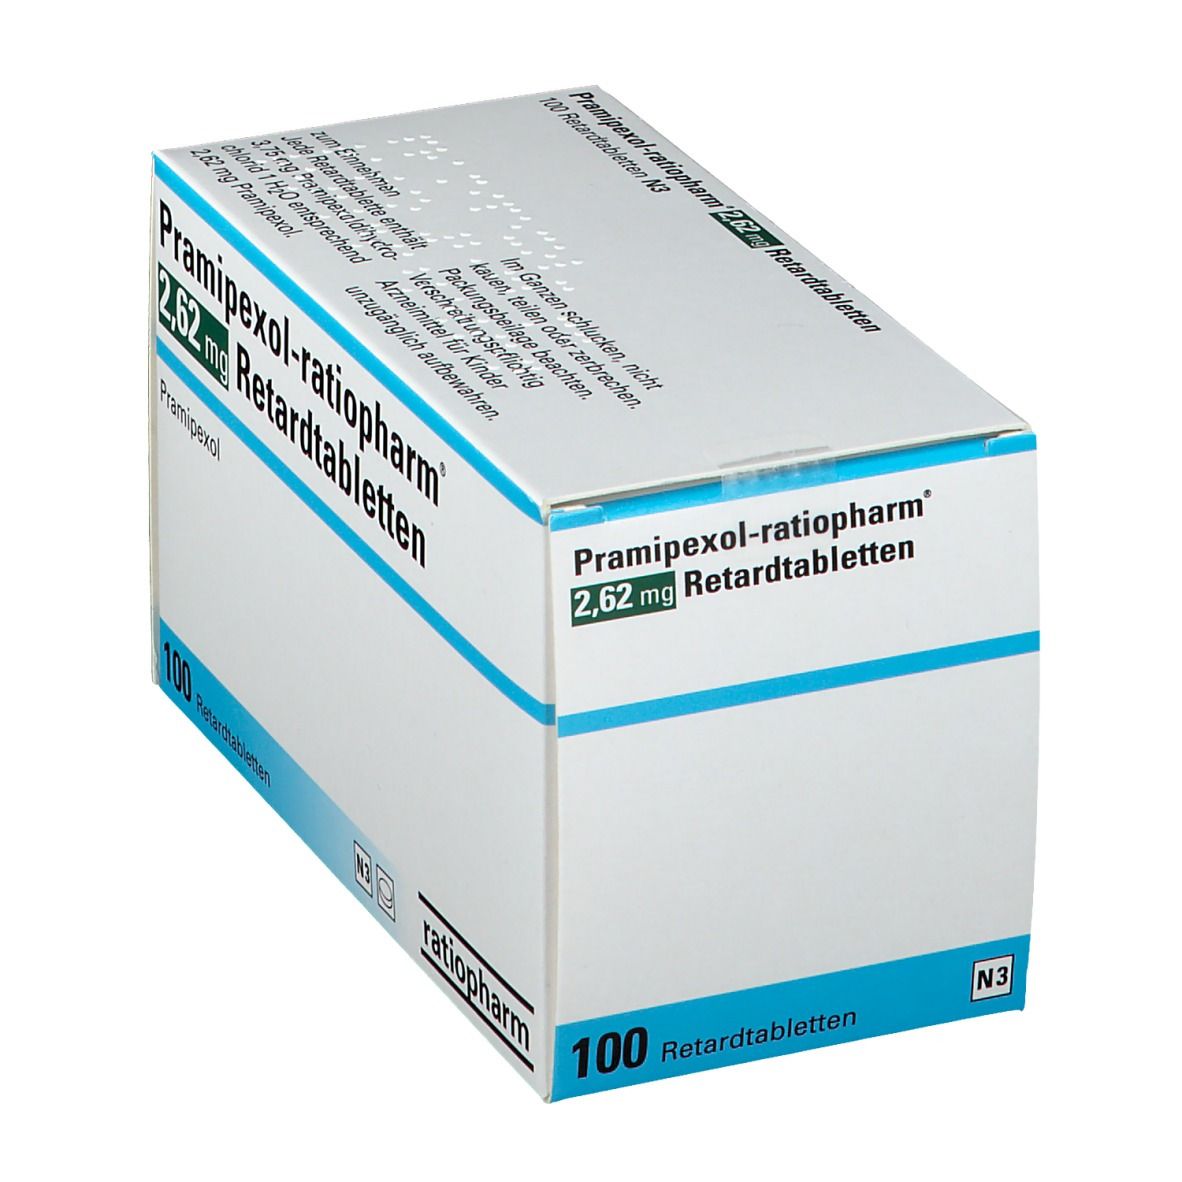 Pramipexol-ratiopharm® 2,62 mg